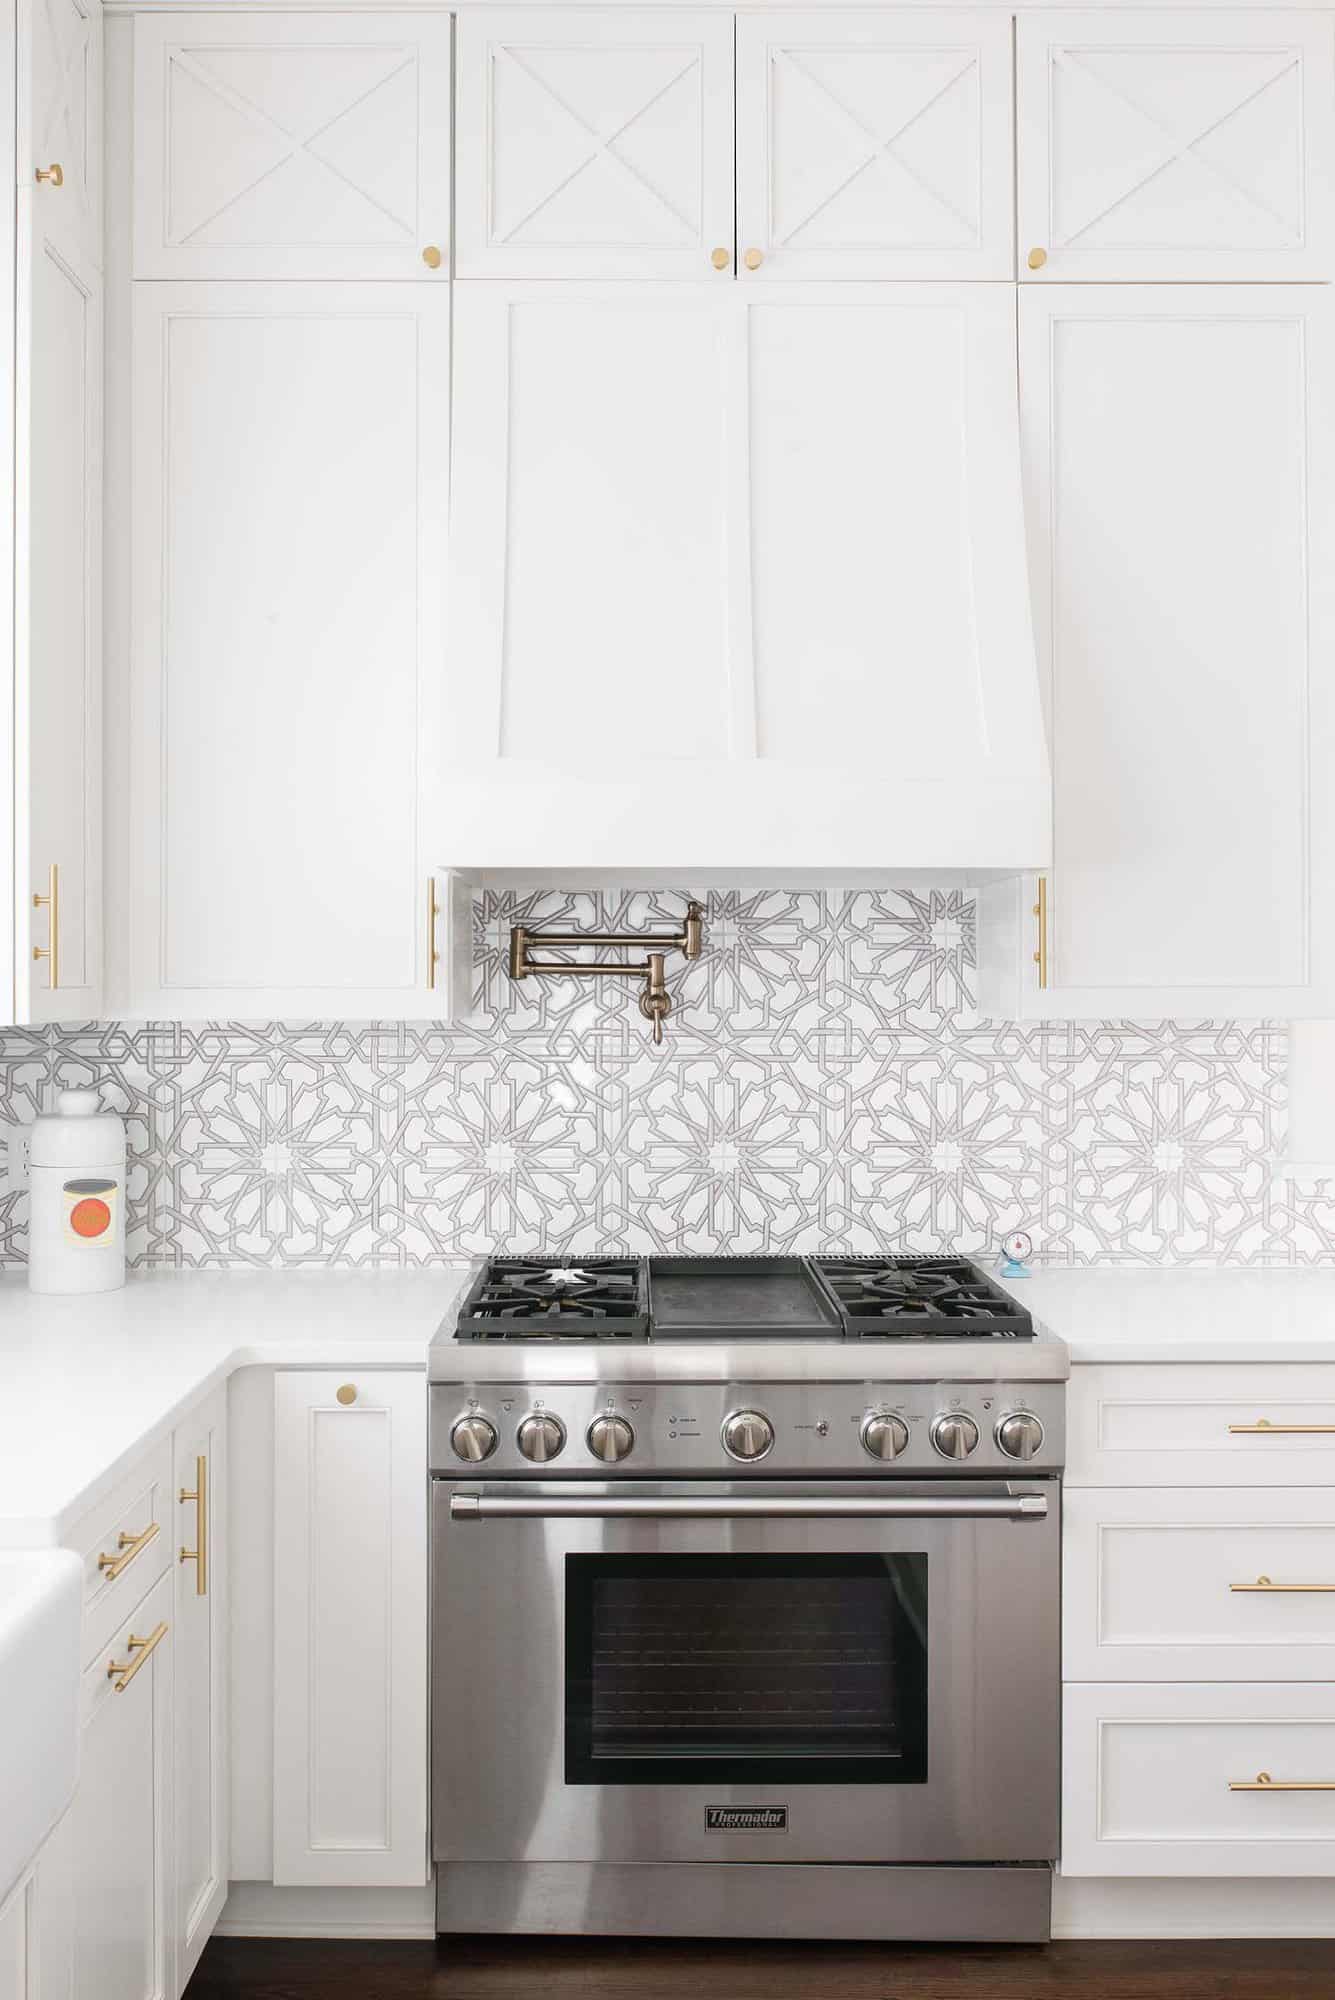 modern-kitchen-with-pattern-backsplash-tile